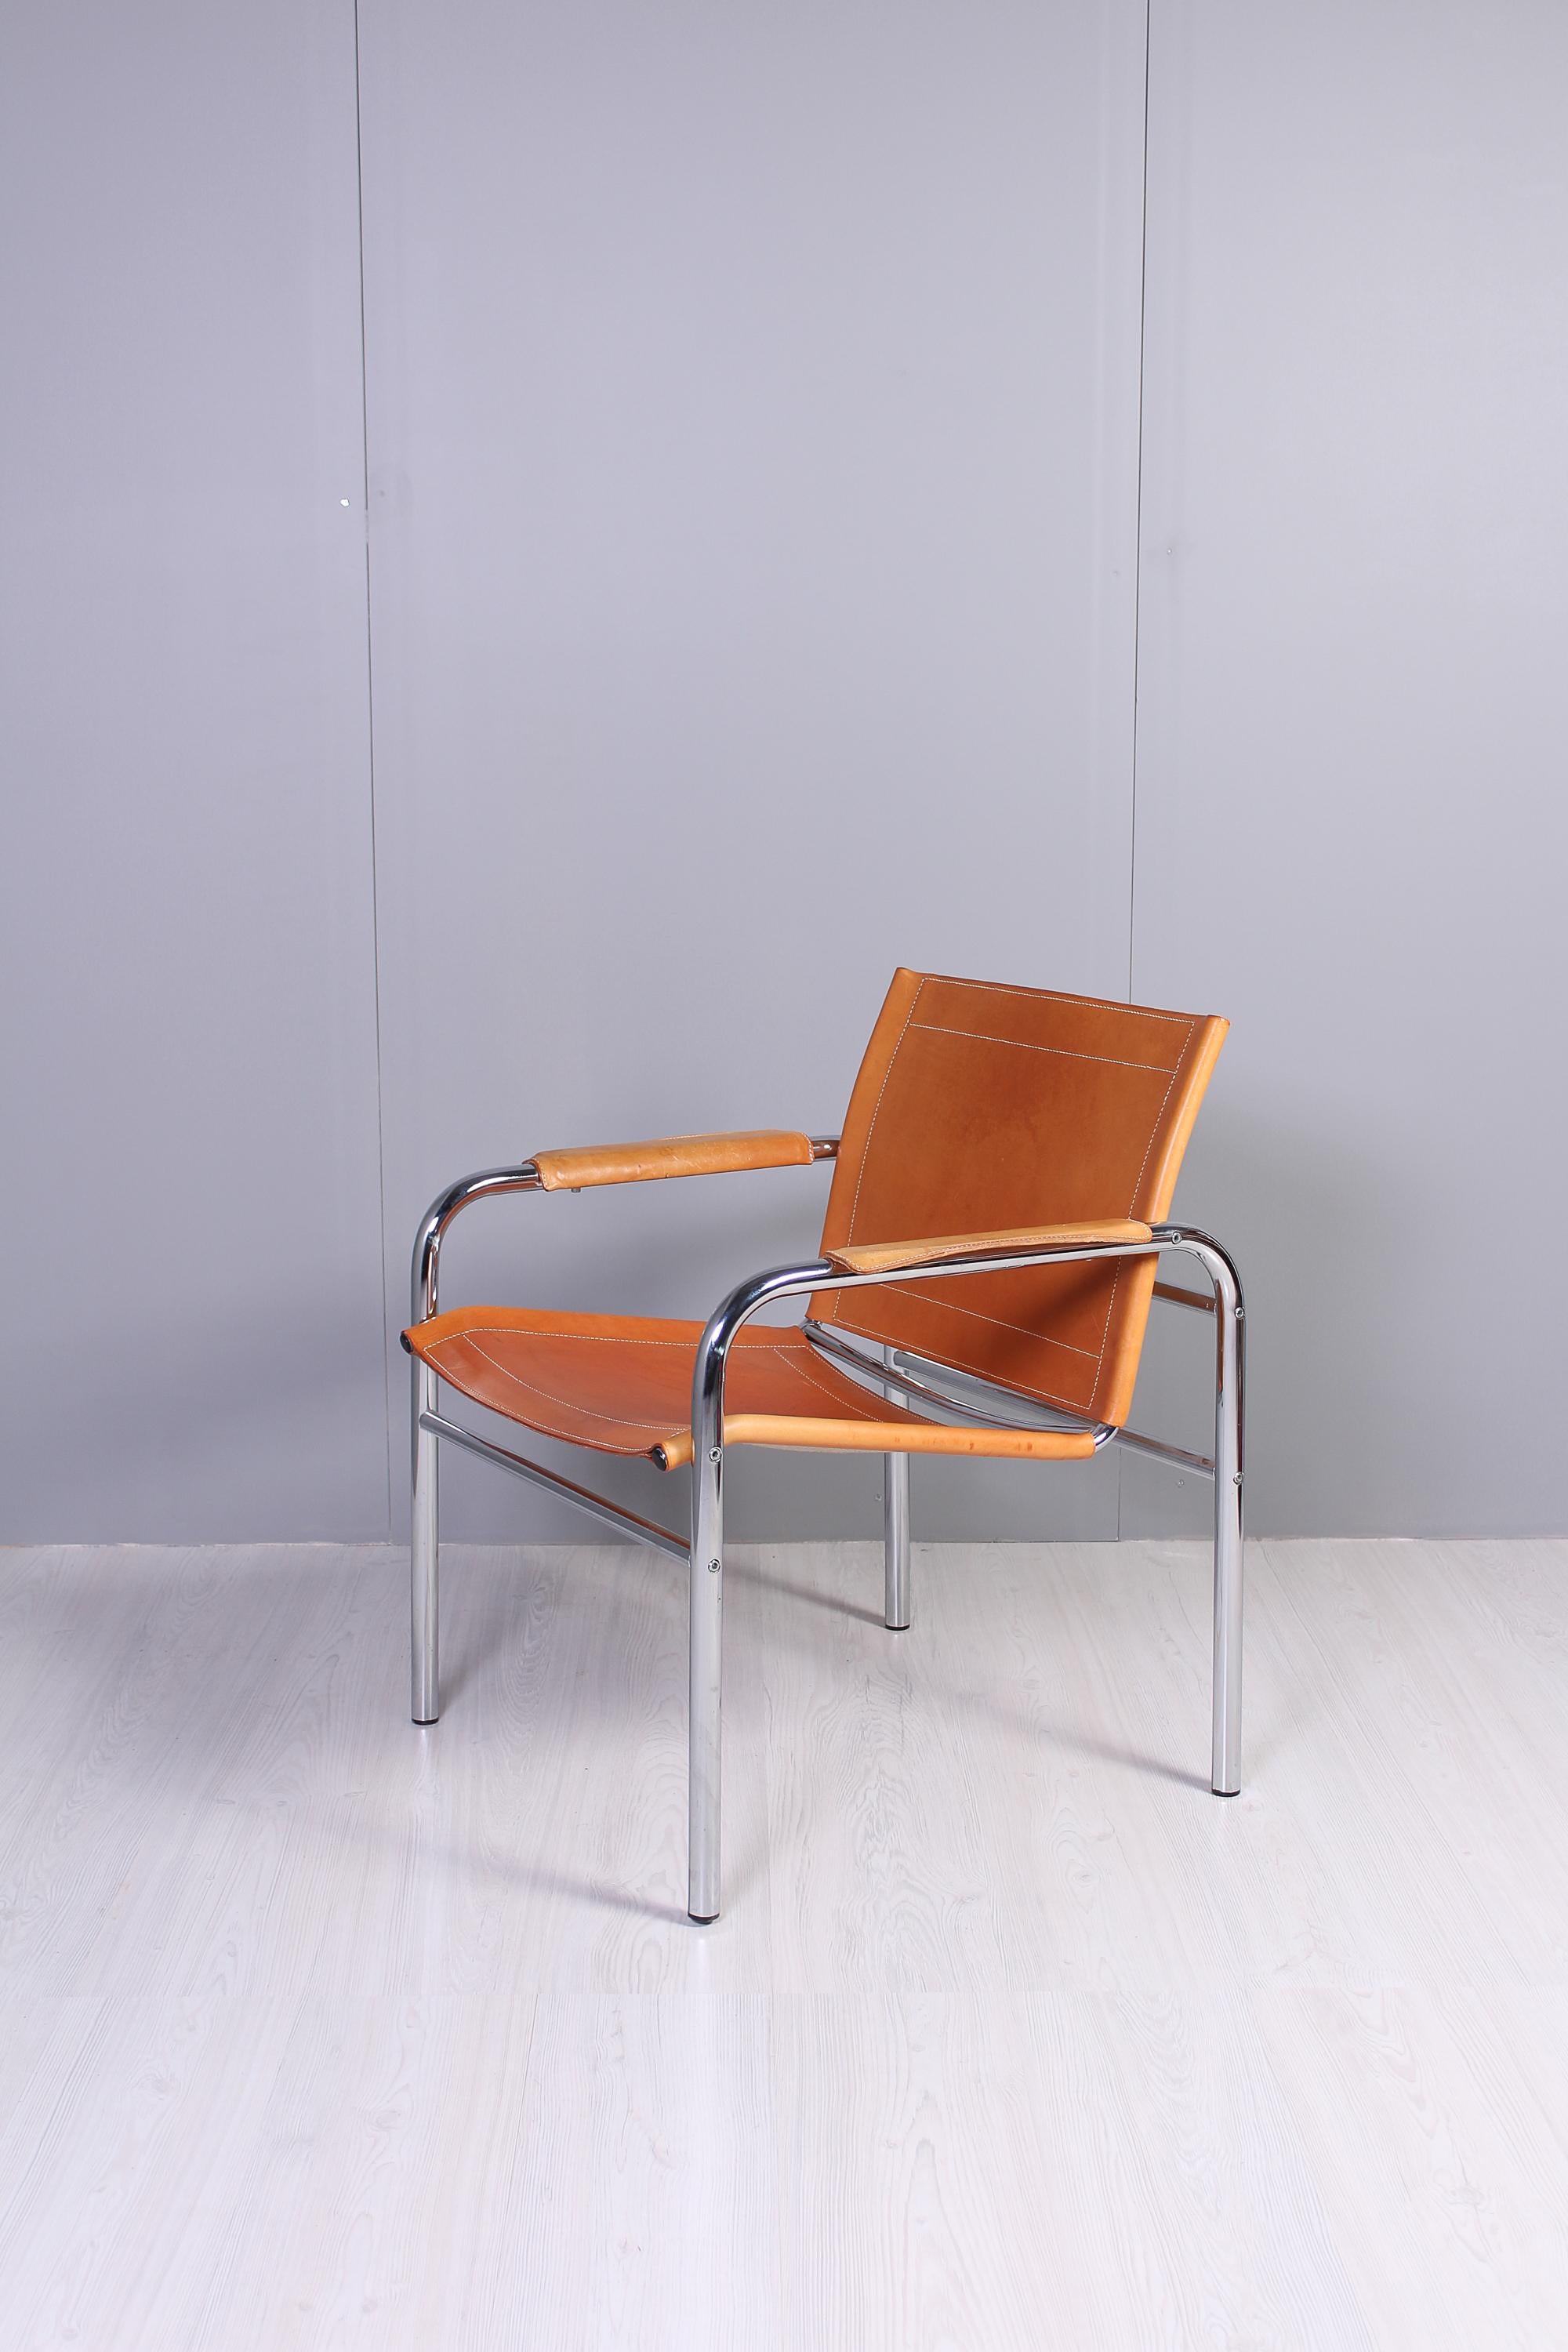 Klinte" Cognac Leather Easy Chair by Tord Björklund, 1970s at 1stDibs